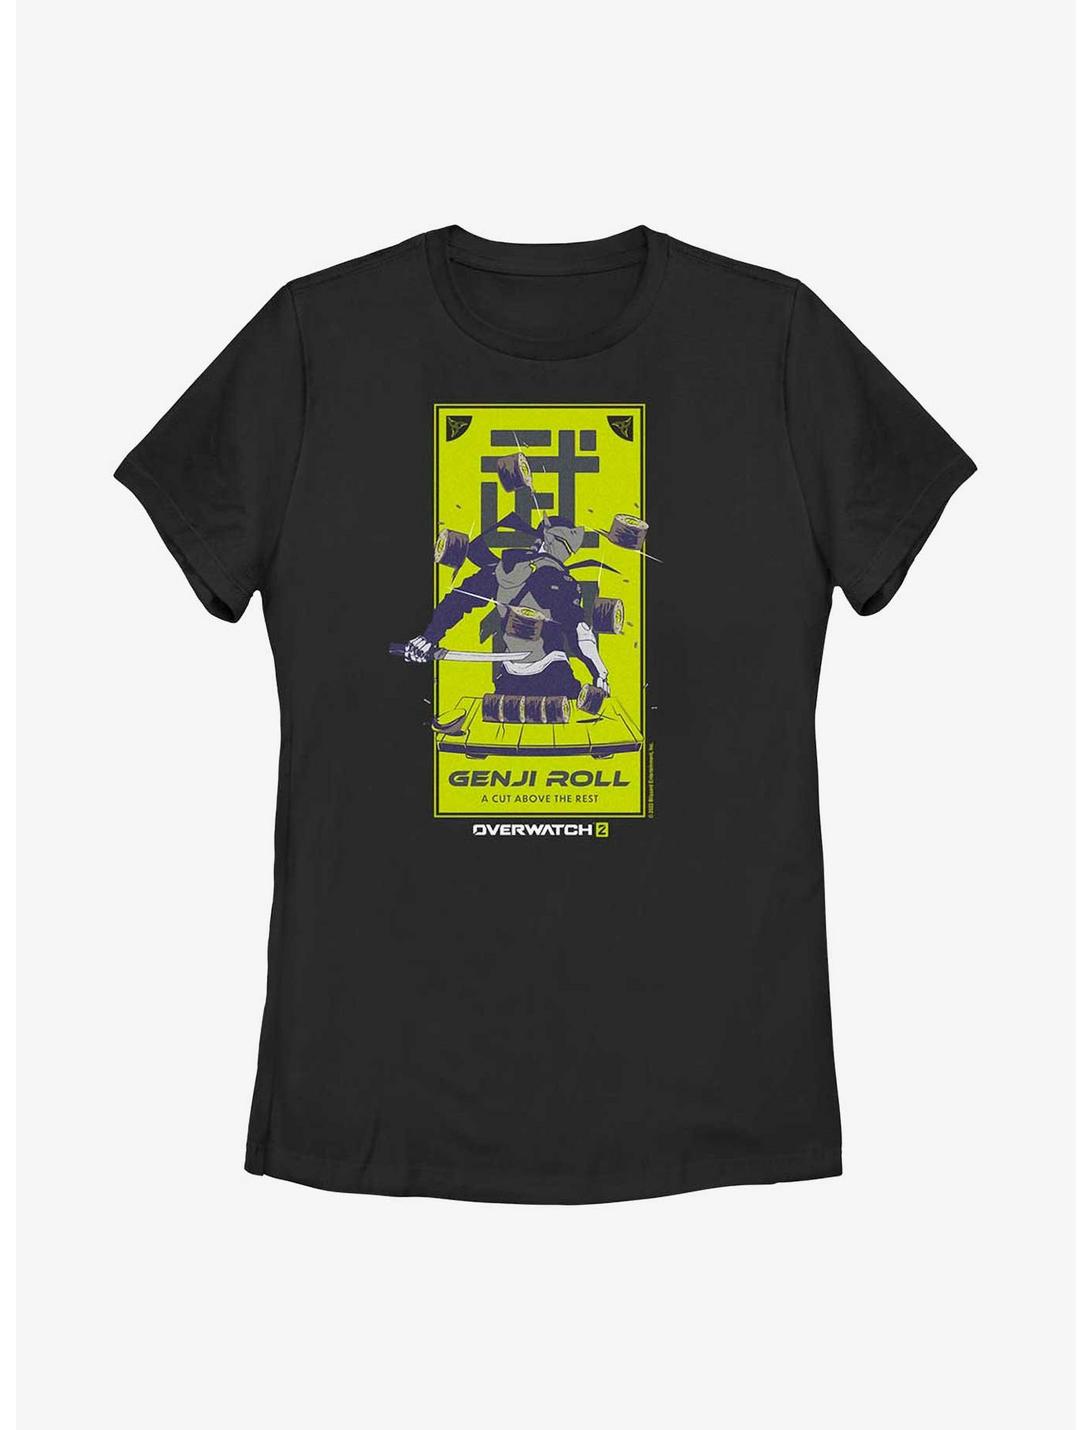 Overwatch 2 Genji Roll Poster Womens T-Shirt, BLACK, hi-res